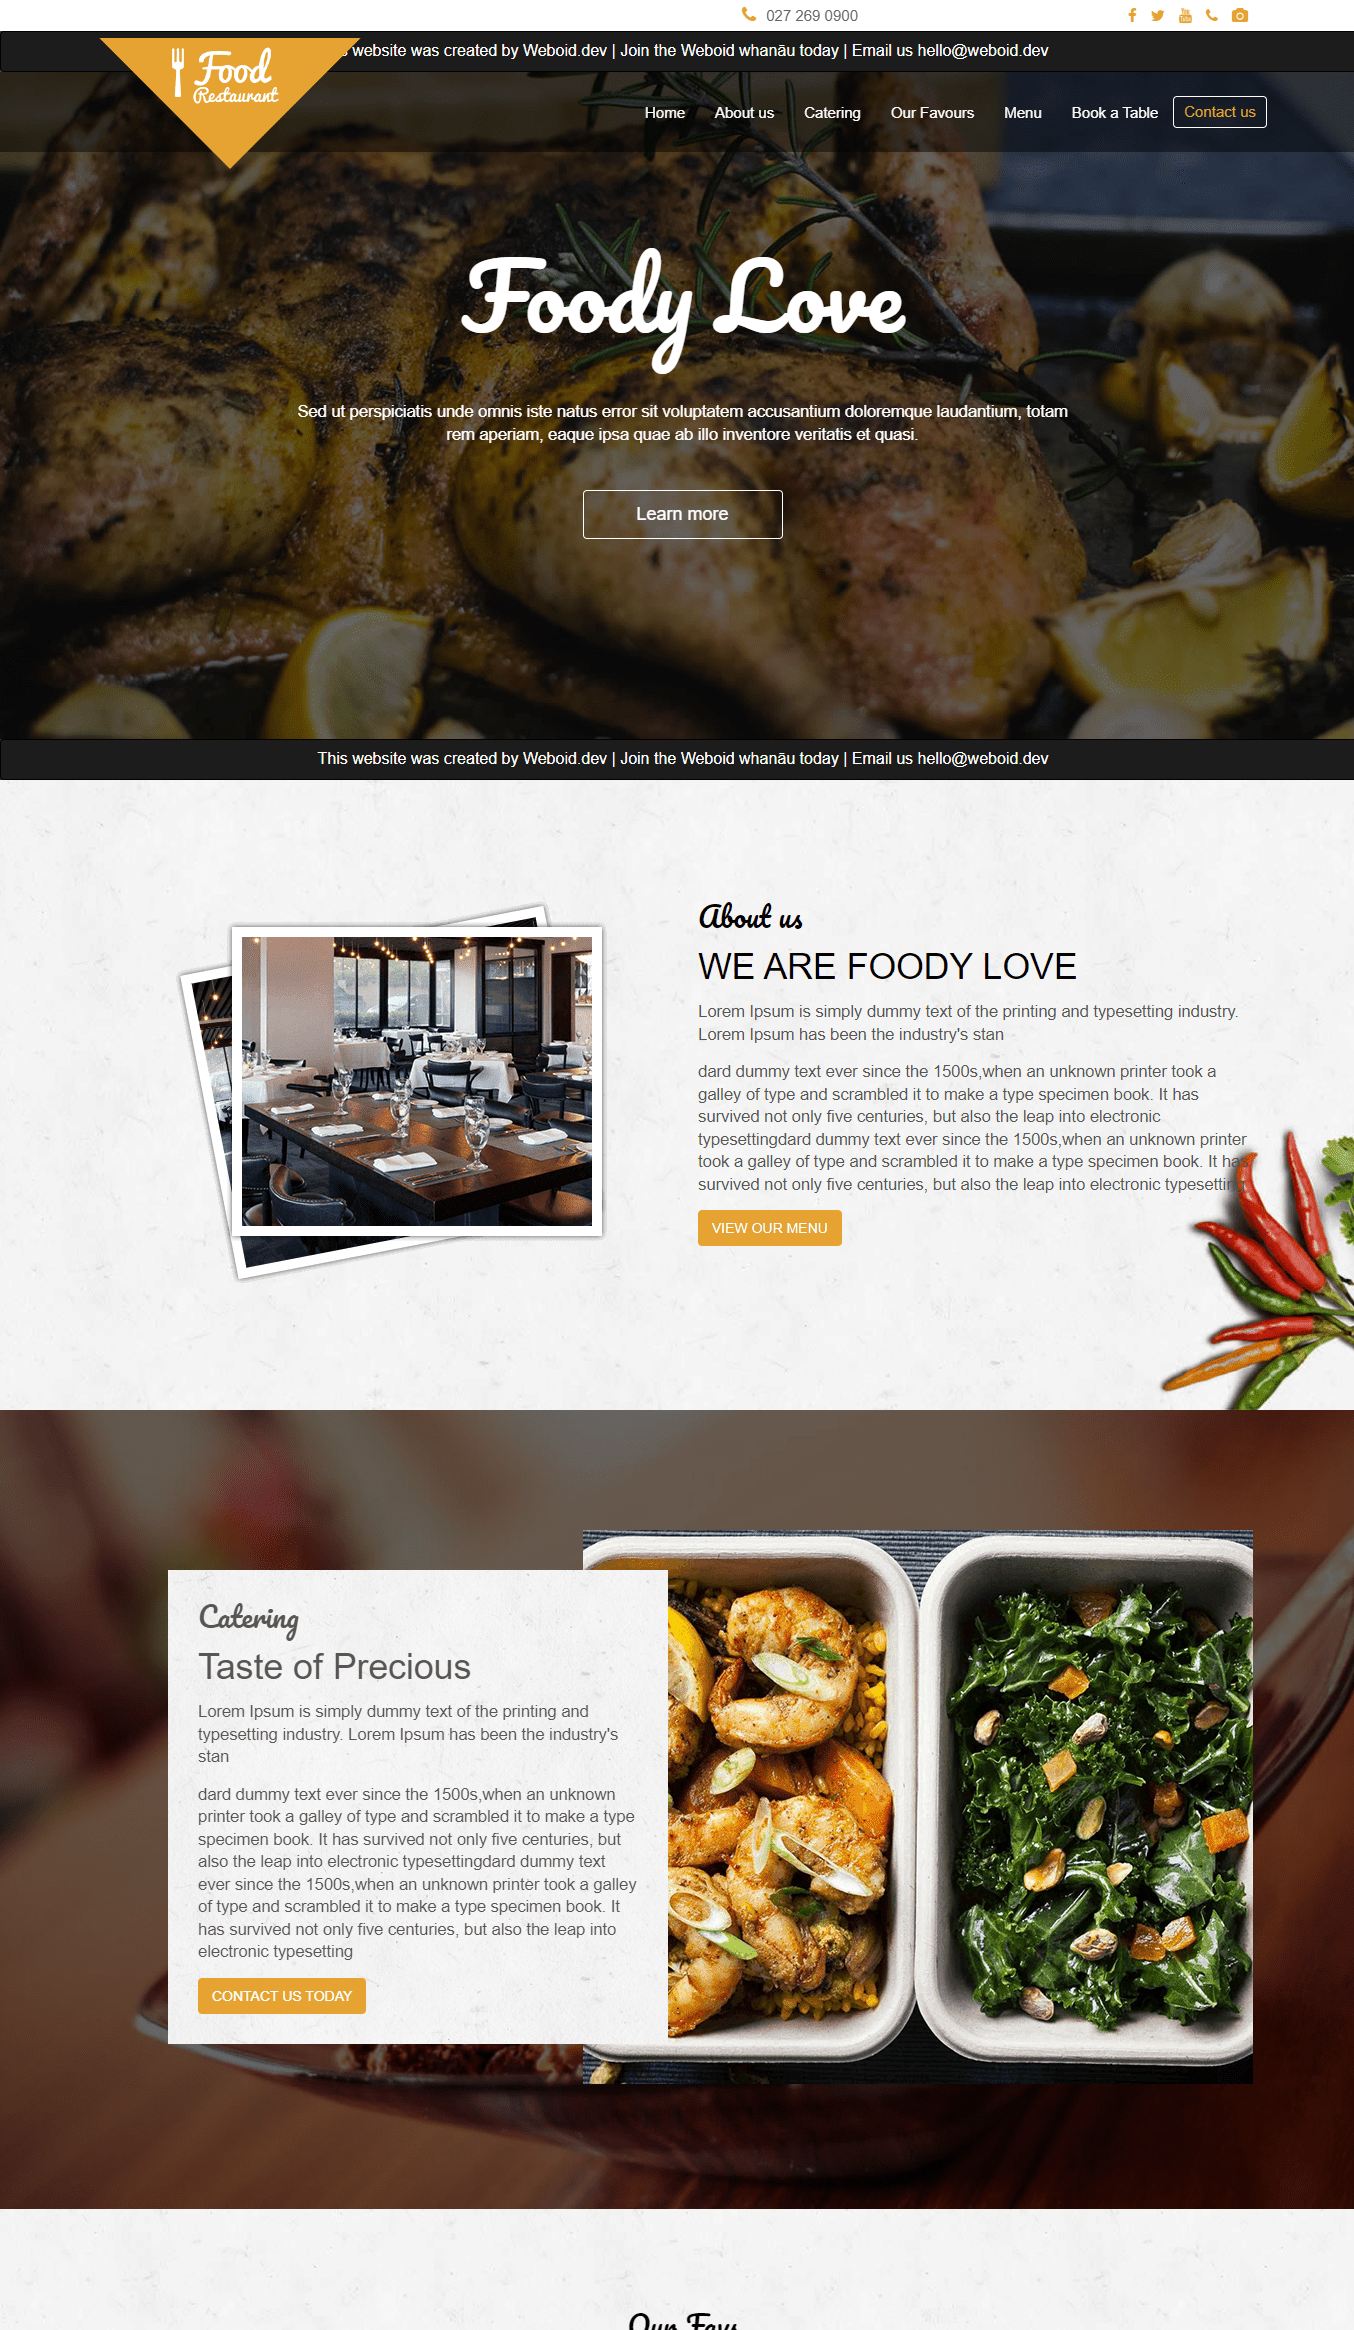 Website screenshot - Food love